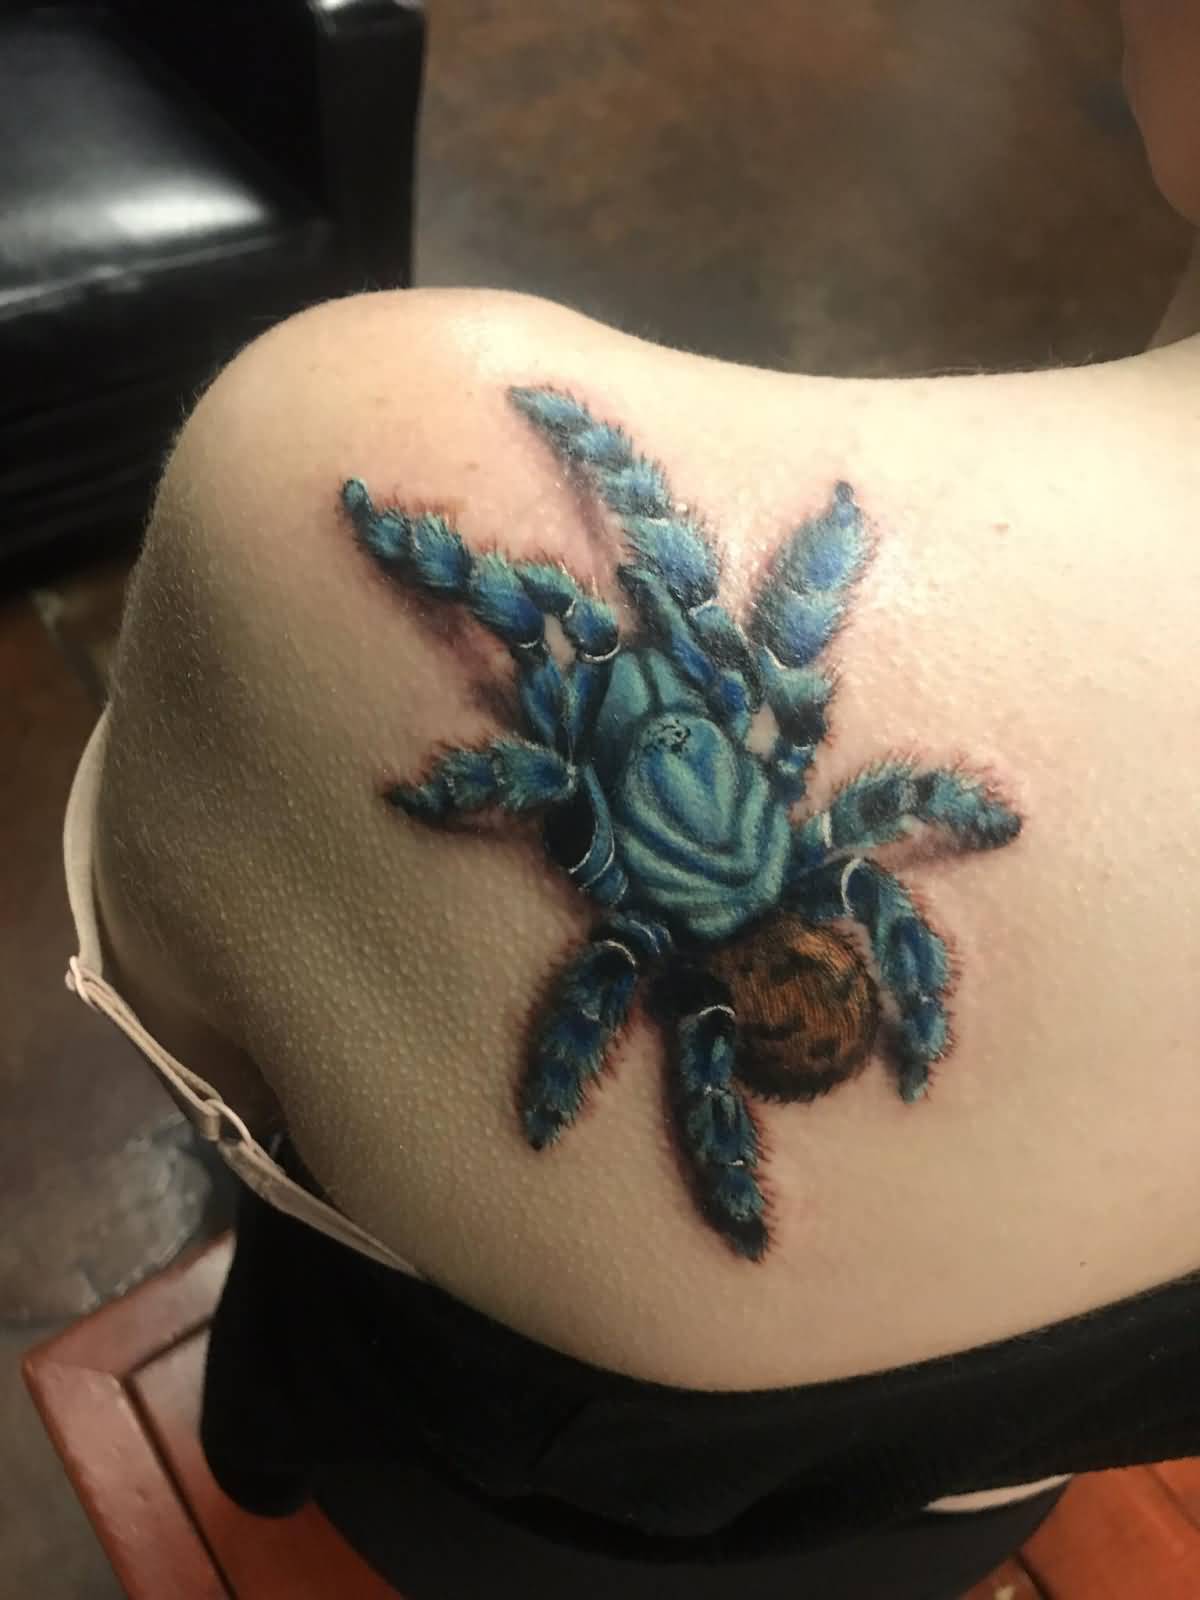 3D Blue Realistic Tarantula Tattoo On Back Shoulder Done By Tony At Eternal Tattoos in Clawson, MI.